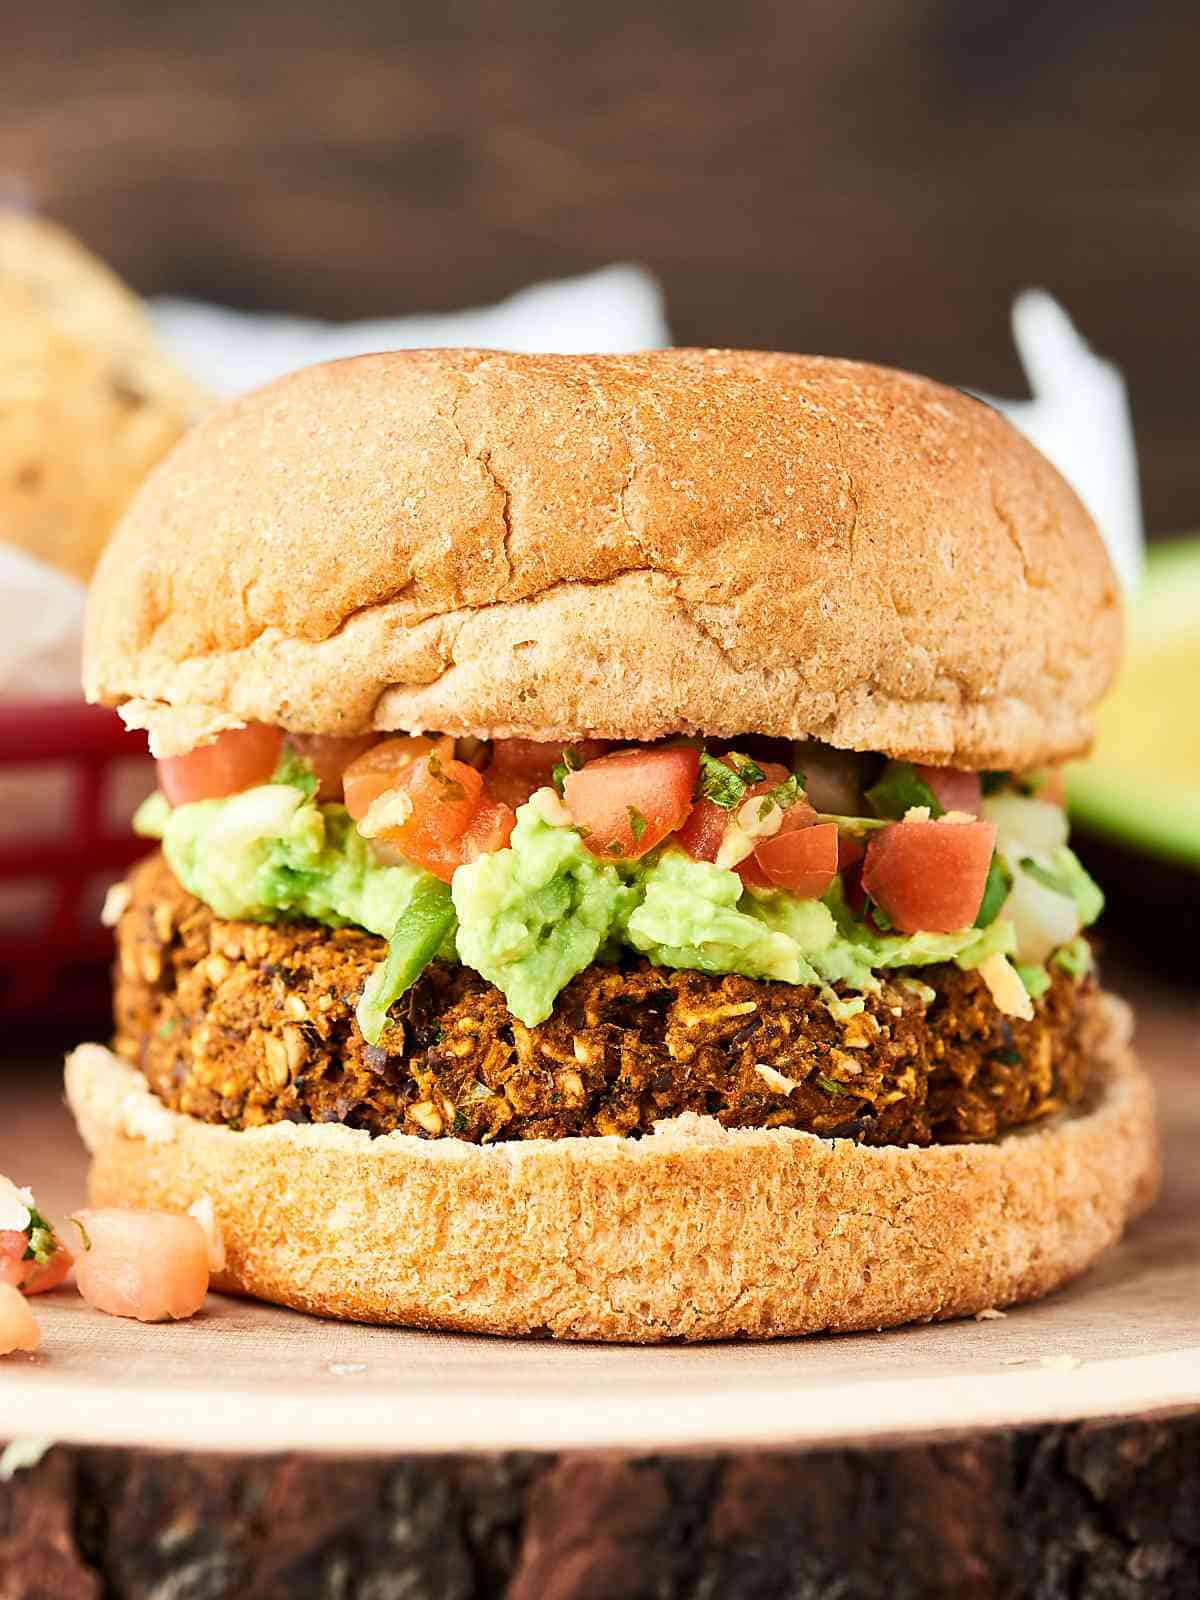 Black Bean Burger Recipe - Vegan, Gluten Free, 10 Min Prep